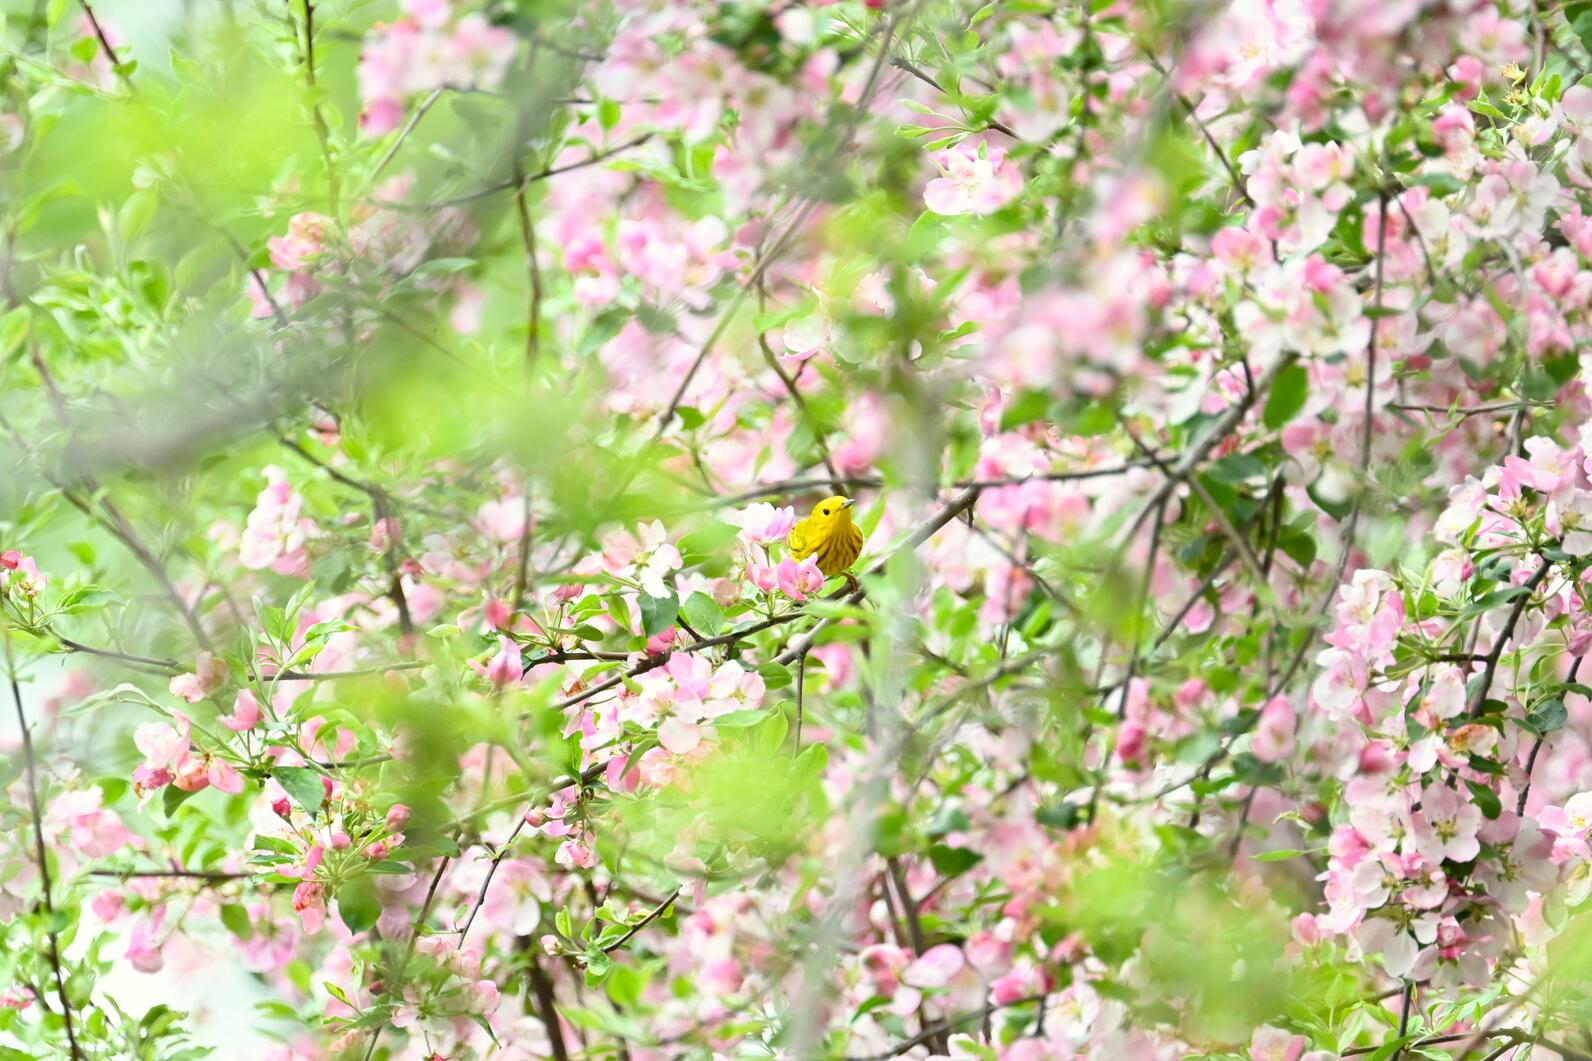 Yellow Warbler sitting on a flowering tree